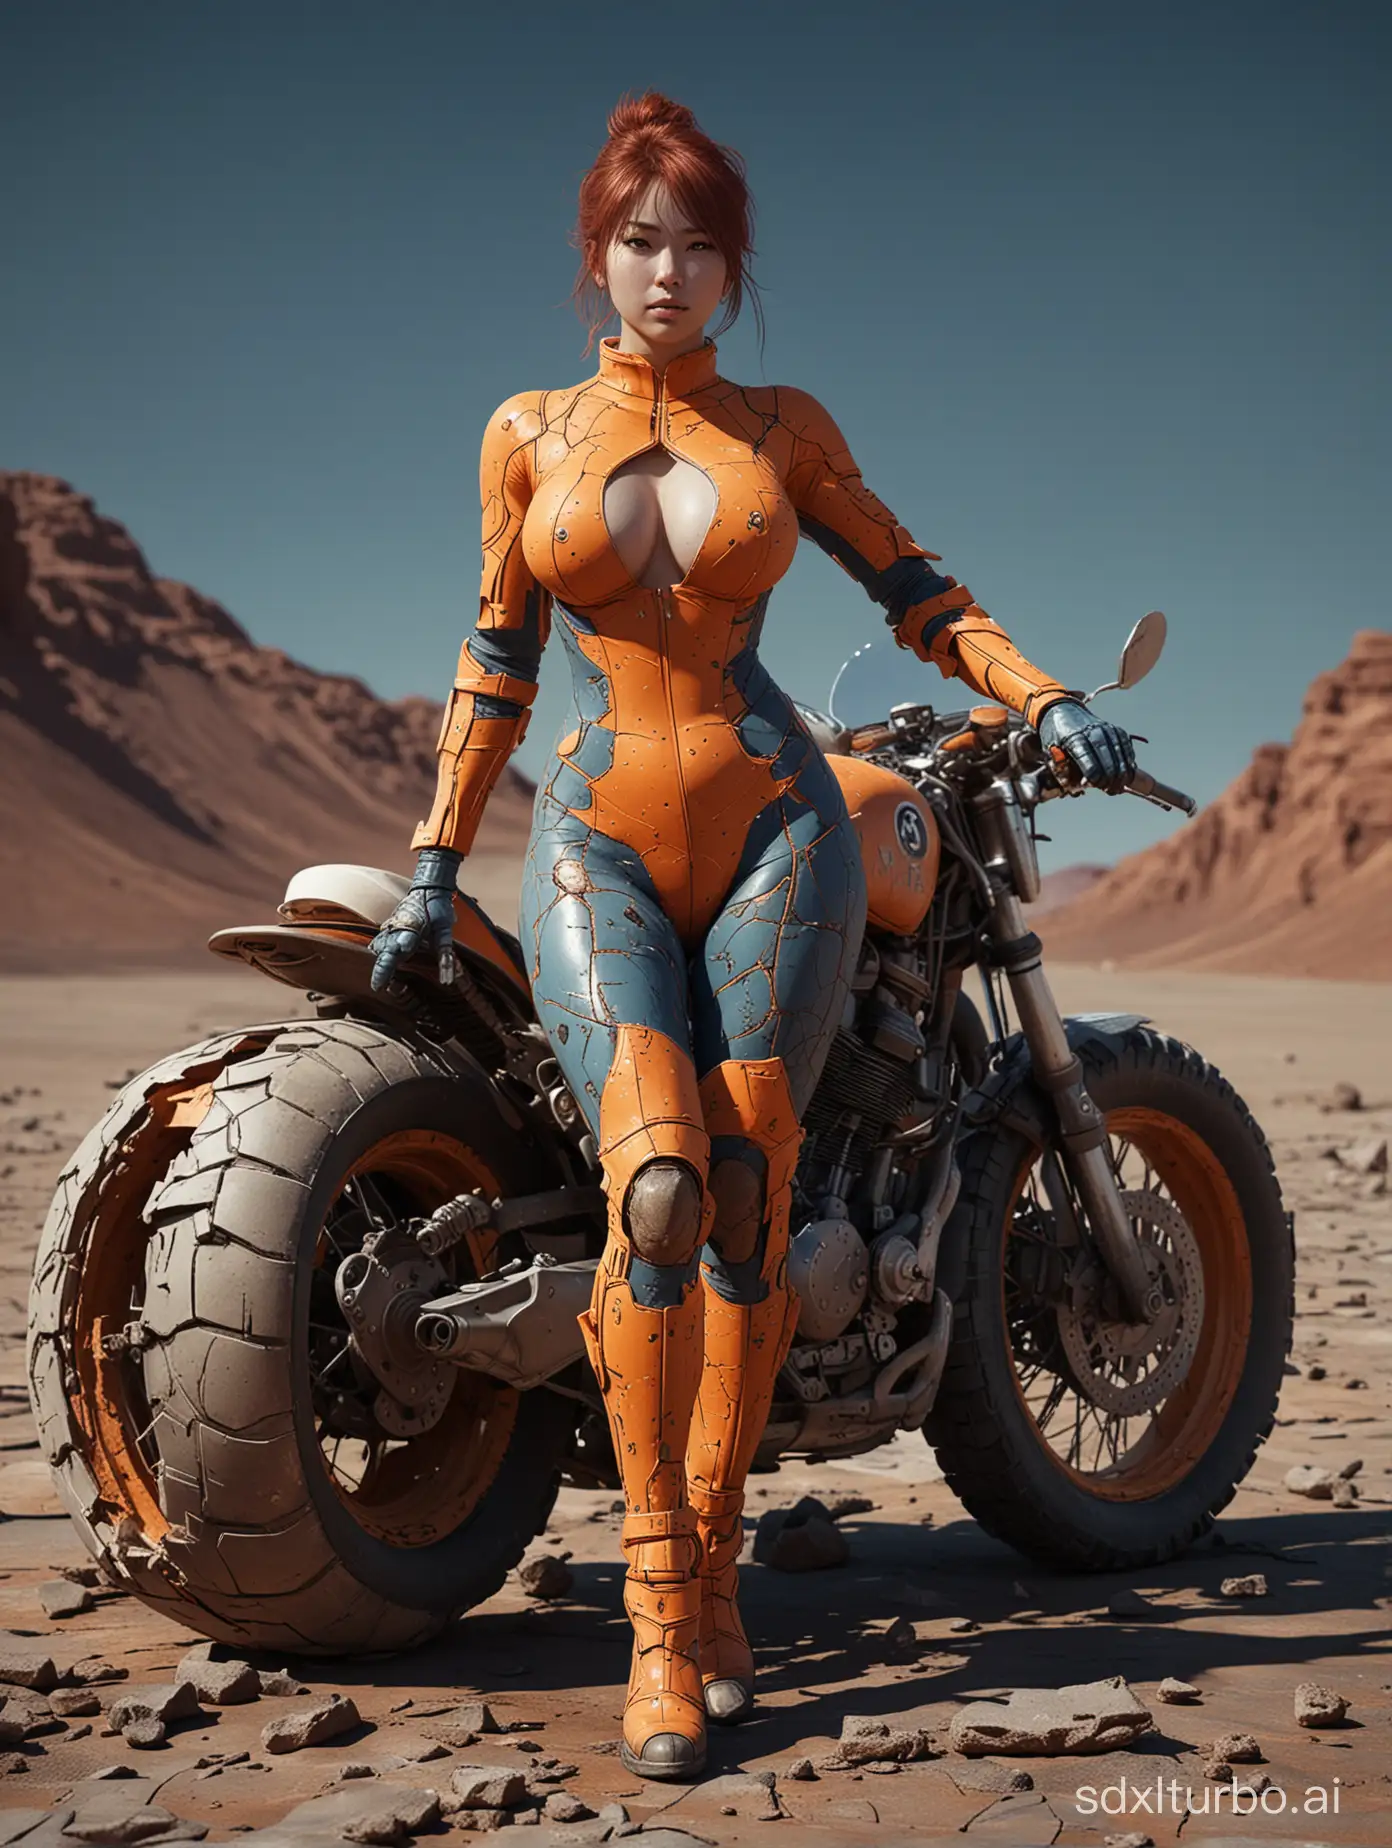 Fukada-Kyoko-Motorcycle-Portrait-Mars-Expedition-and-Elemental-Duality